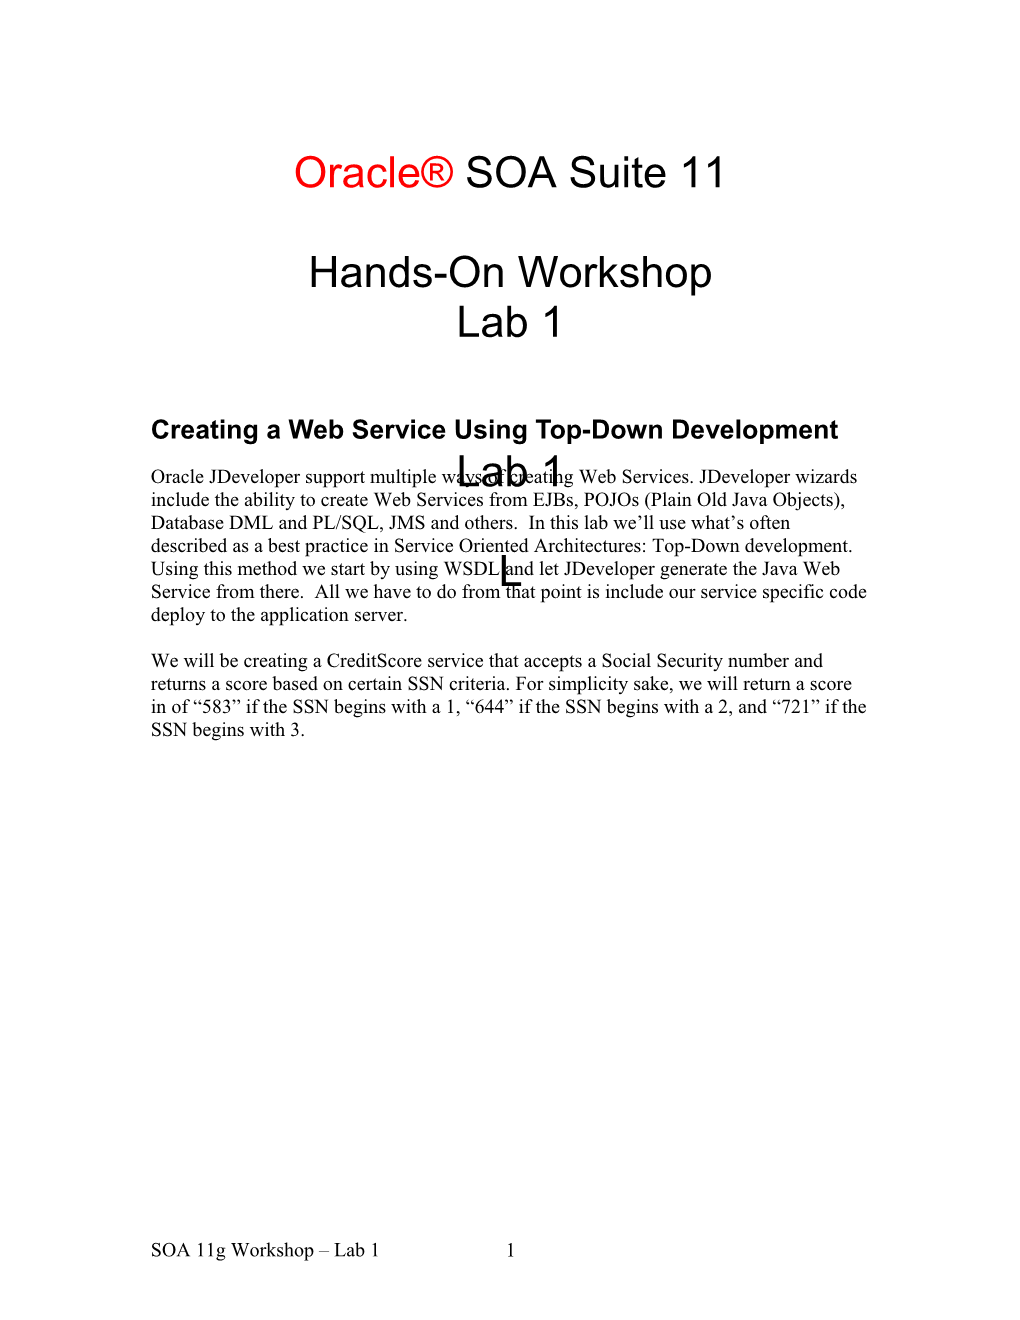 Lab 1: Creating a Java Web Service Using Top-Down Development